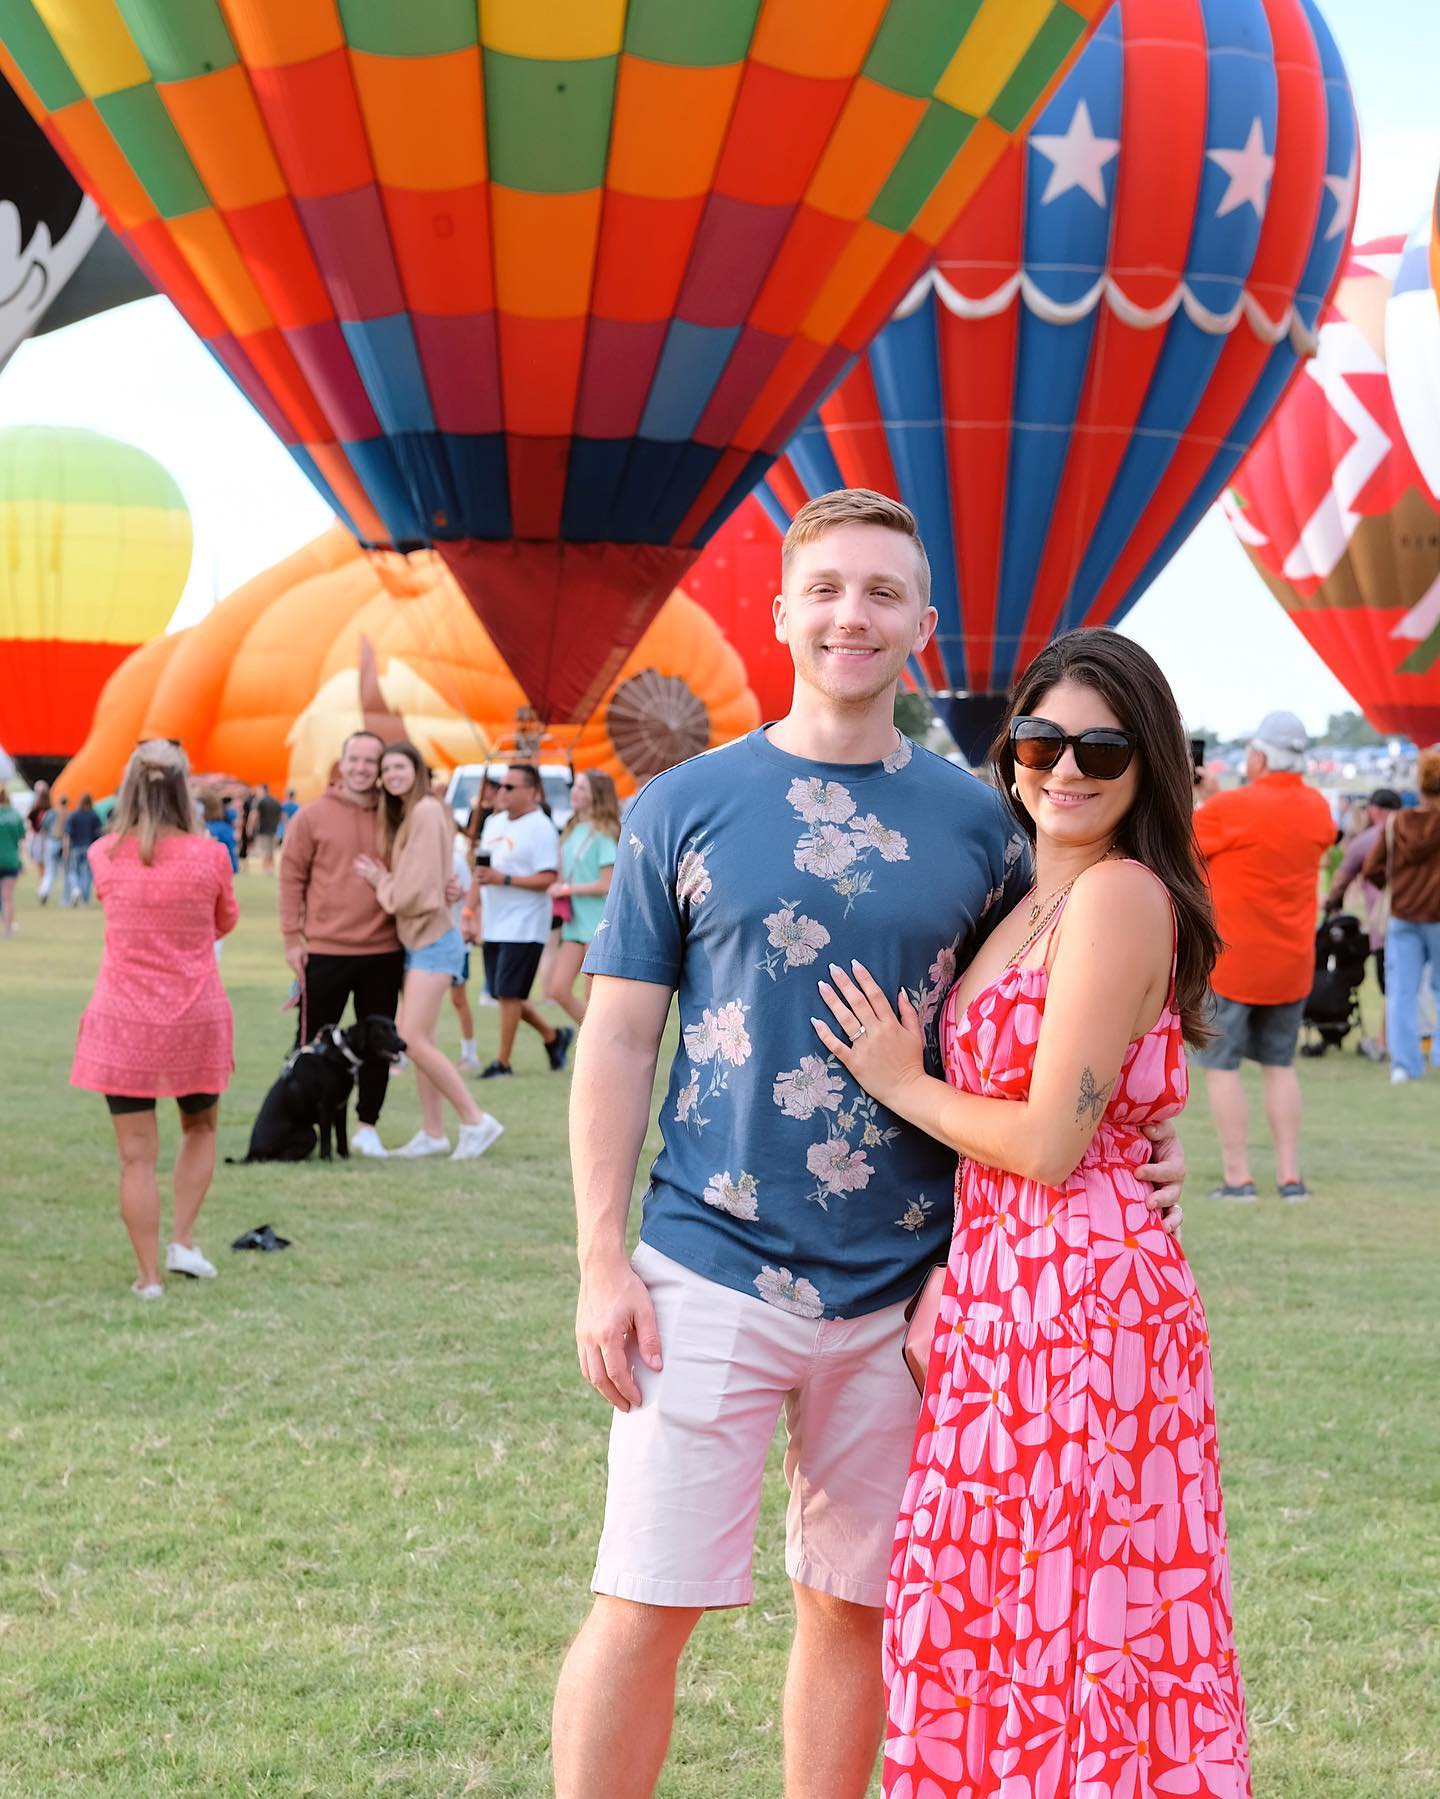 Couple enjoying the hot air balloons at the Plano Hot Air Balloon Festival